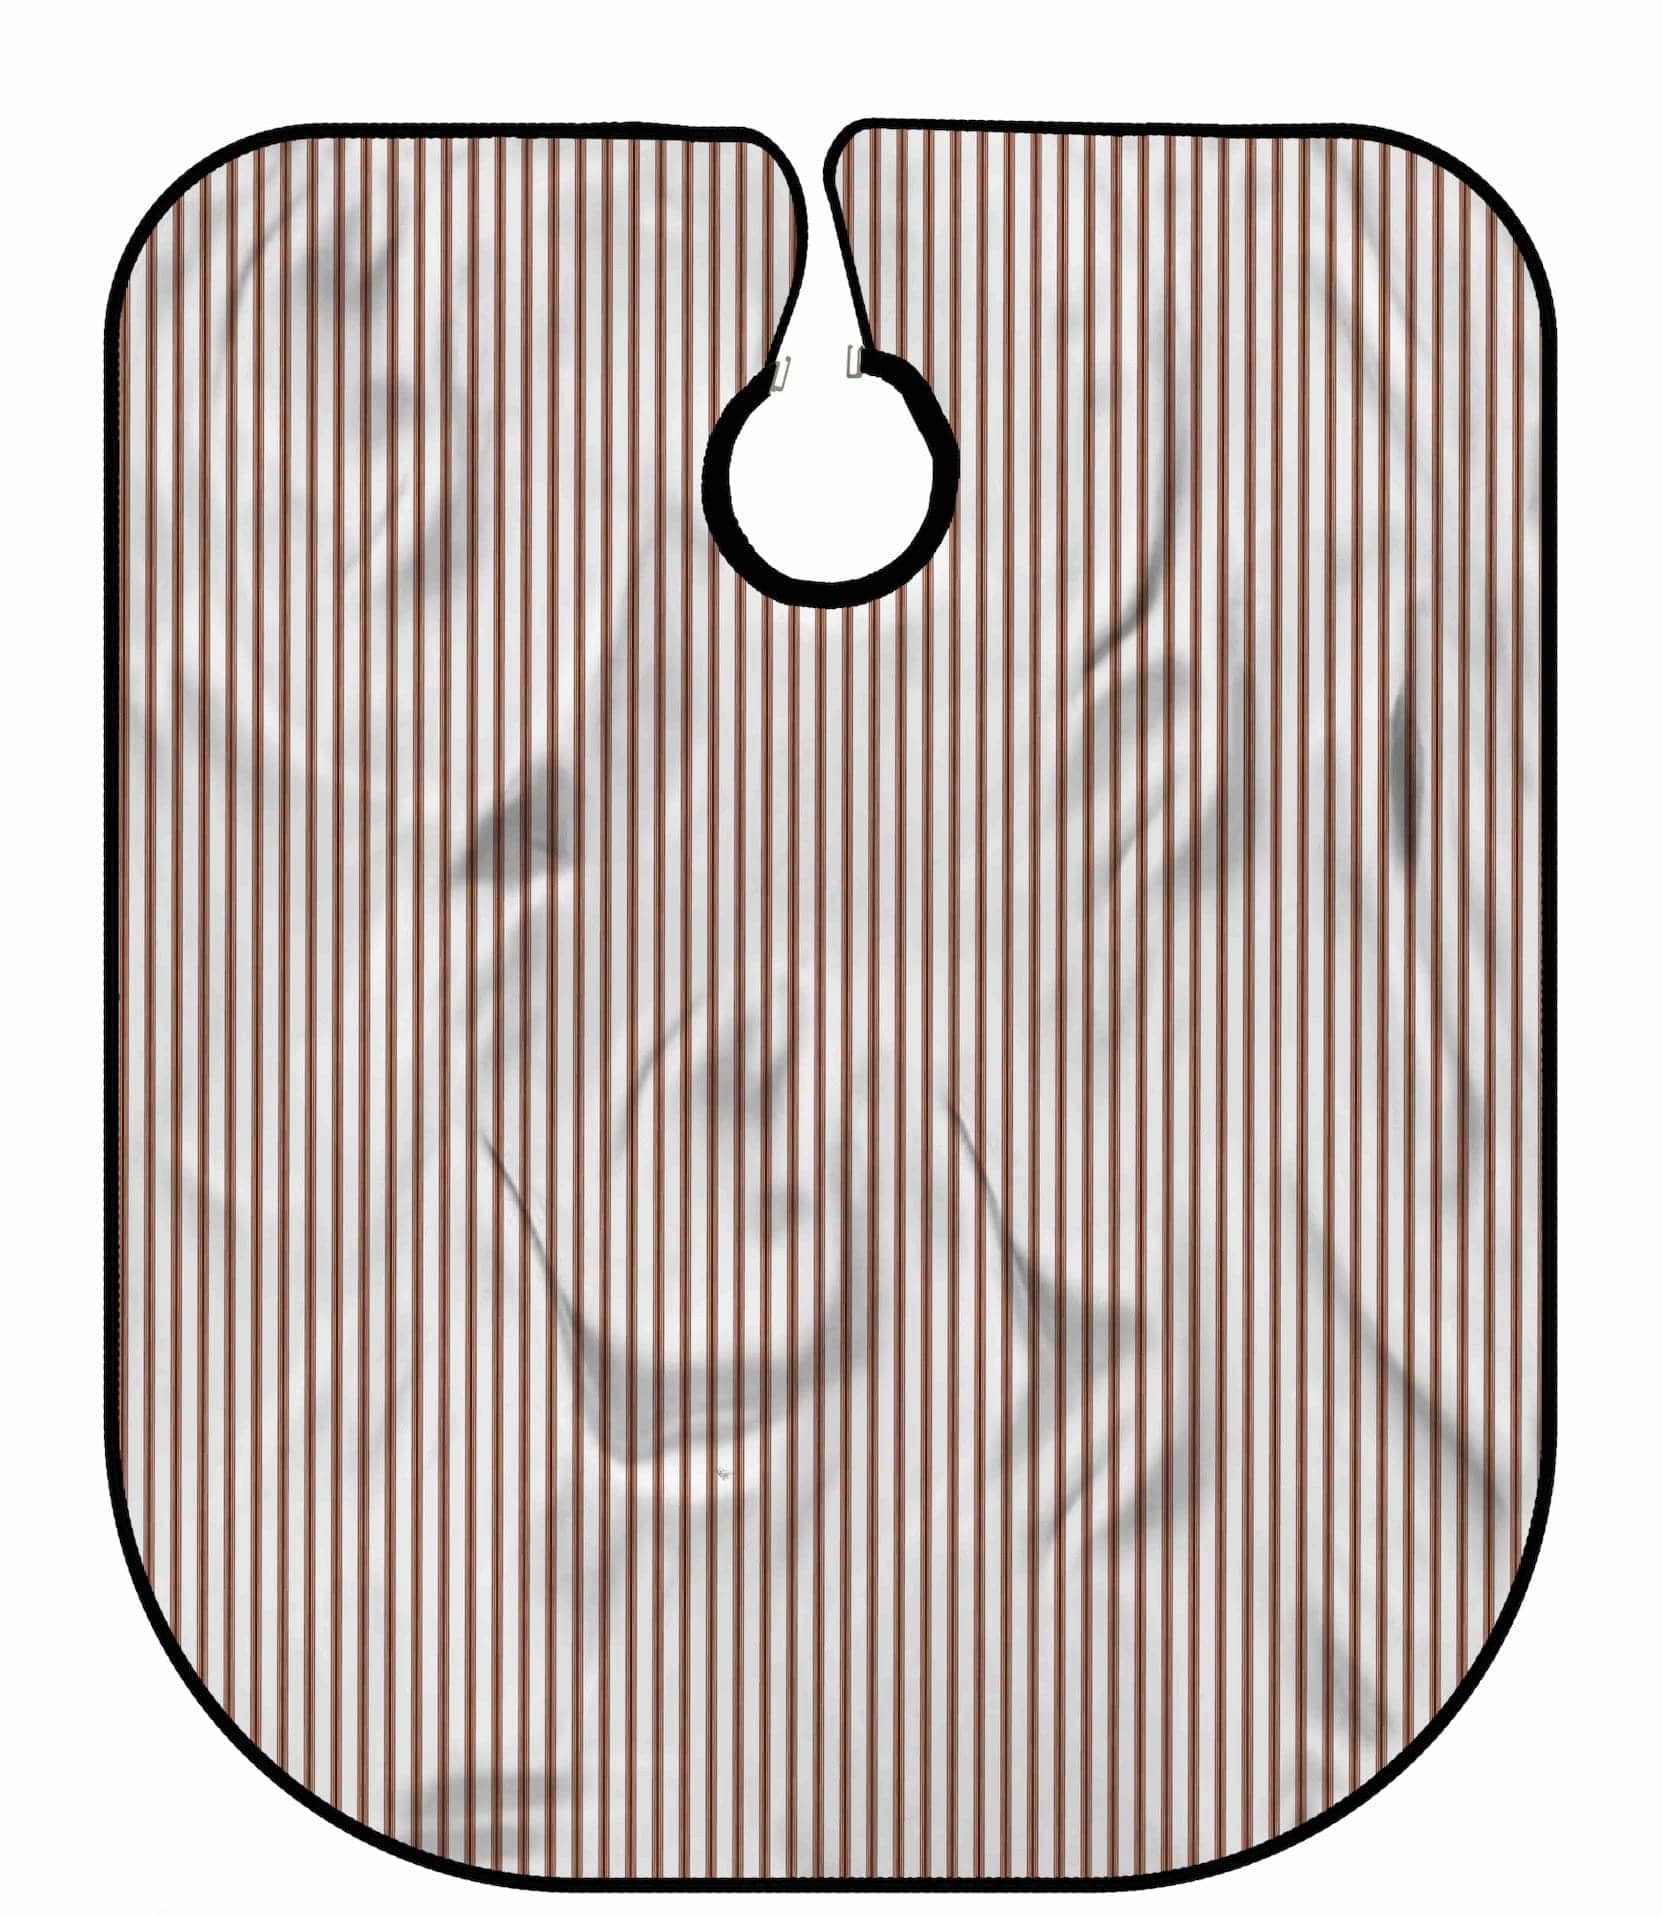 johnbarbersons 1 / Braun / Weiß gestreift / Metallhaken Verschluss Umhang  ohne Logo